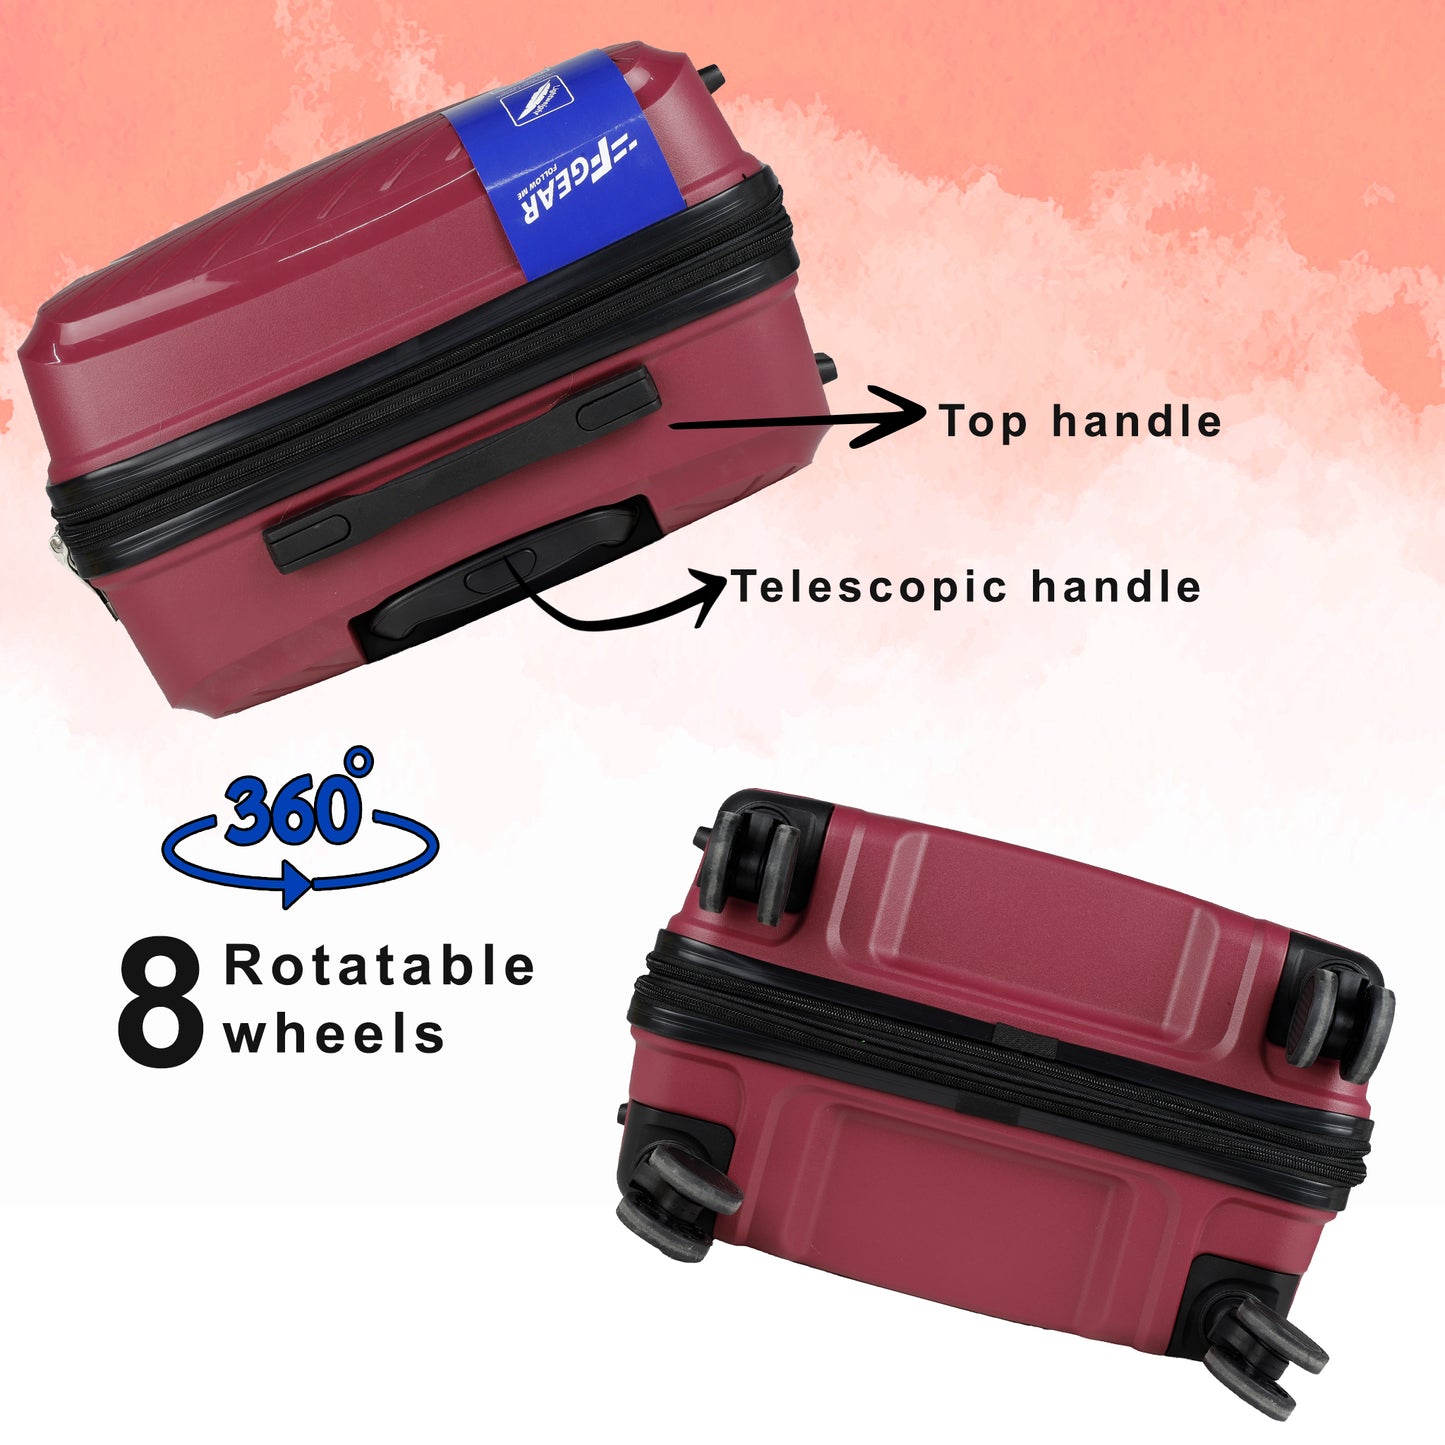 STV PP03 Rosebud Expandable Cabin Suitcase Set of 3